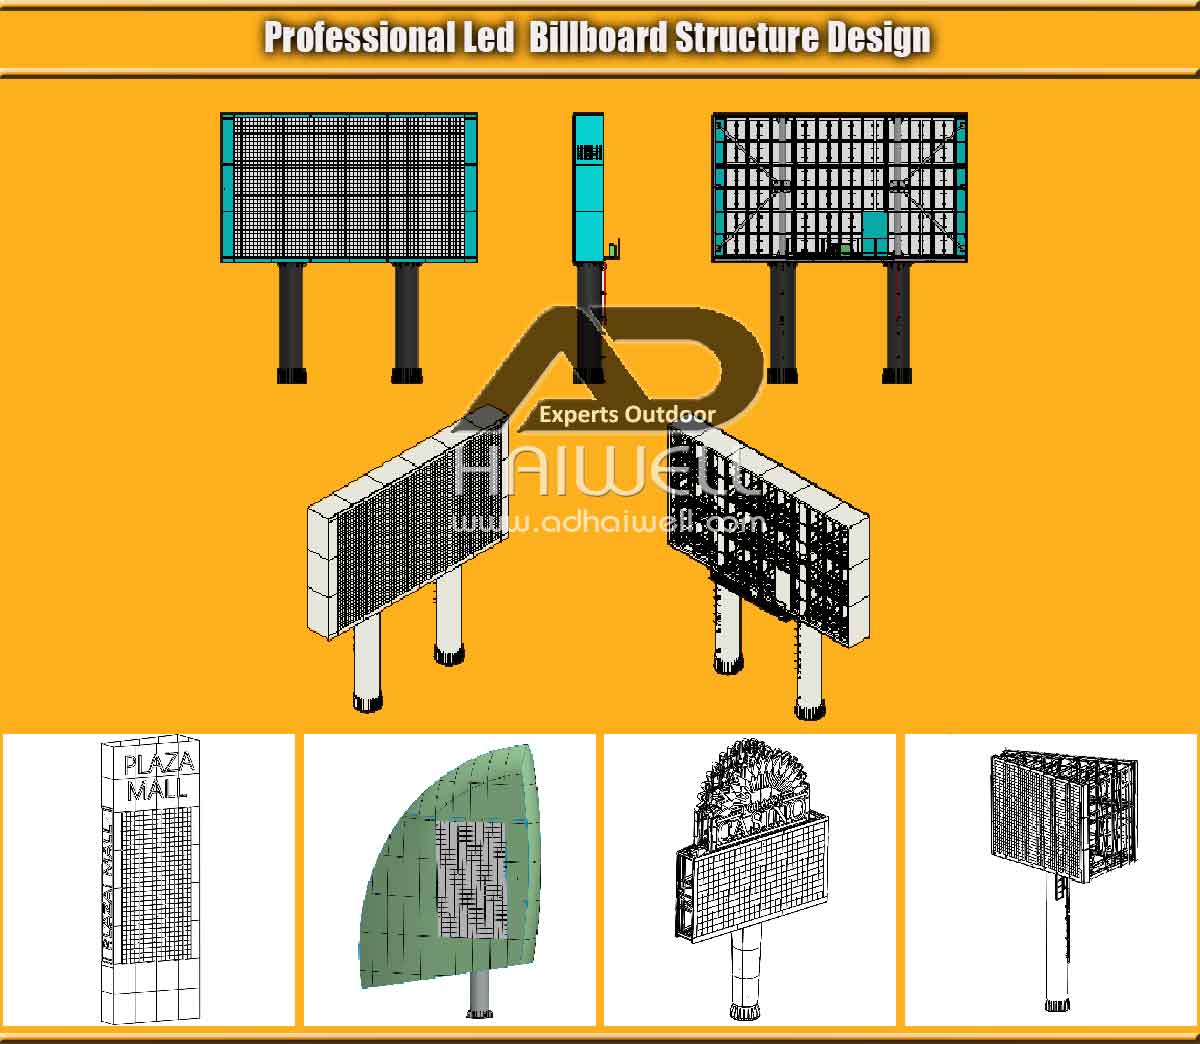 Professionnel-LED-Billboard-Structure-Design